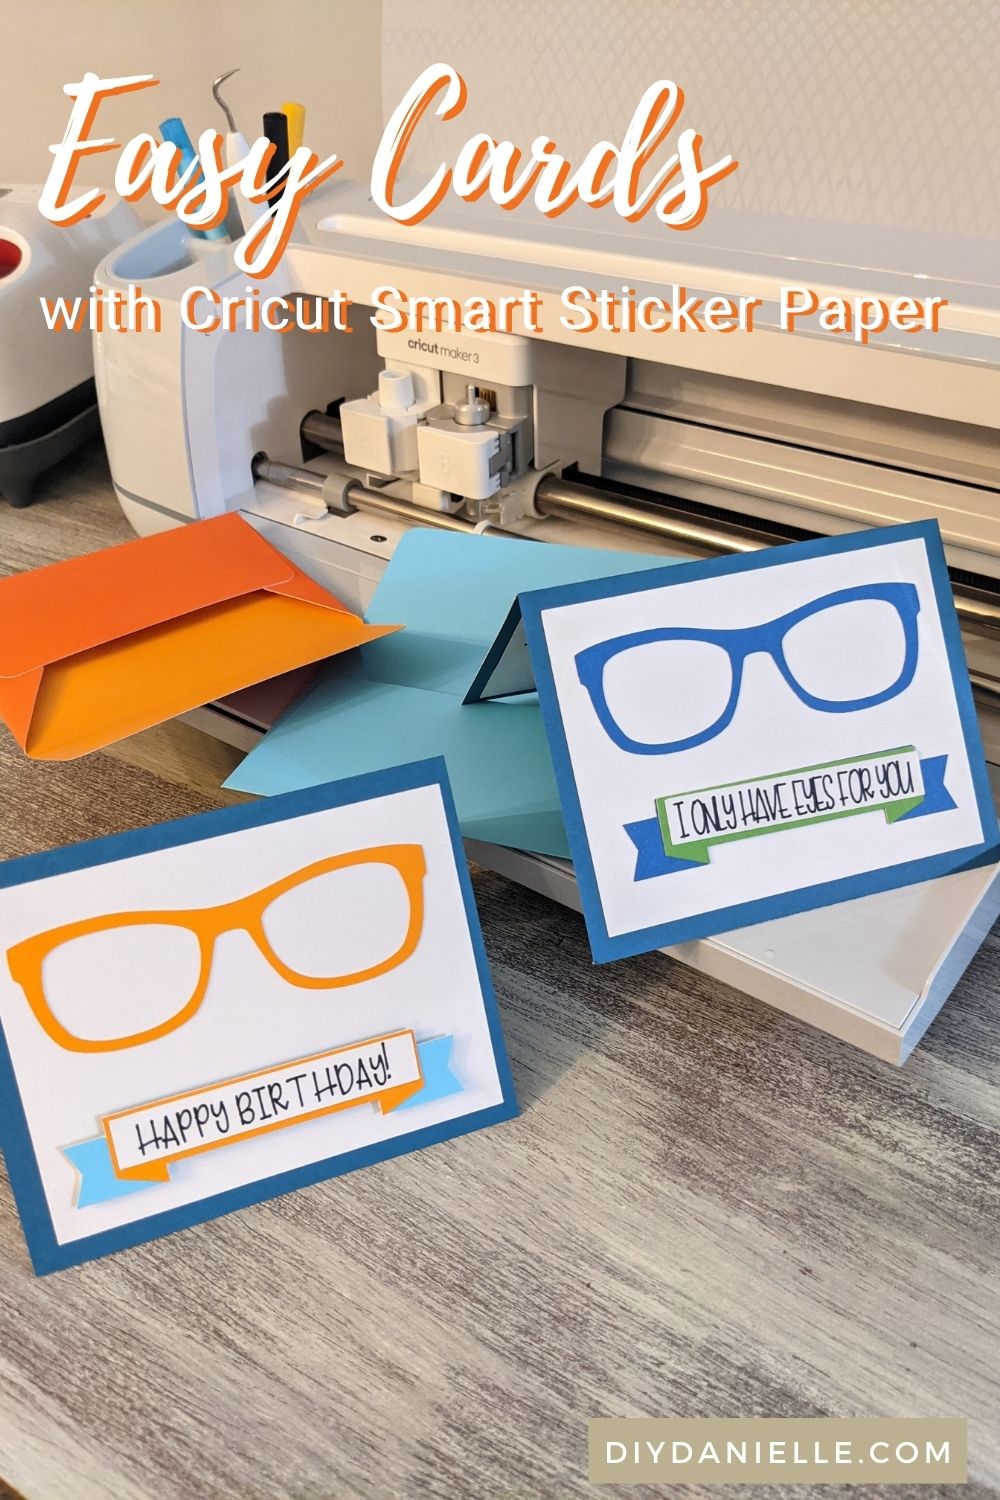 DIY: 15 Easy Cricut Cardstock Projects